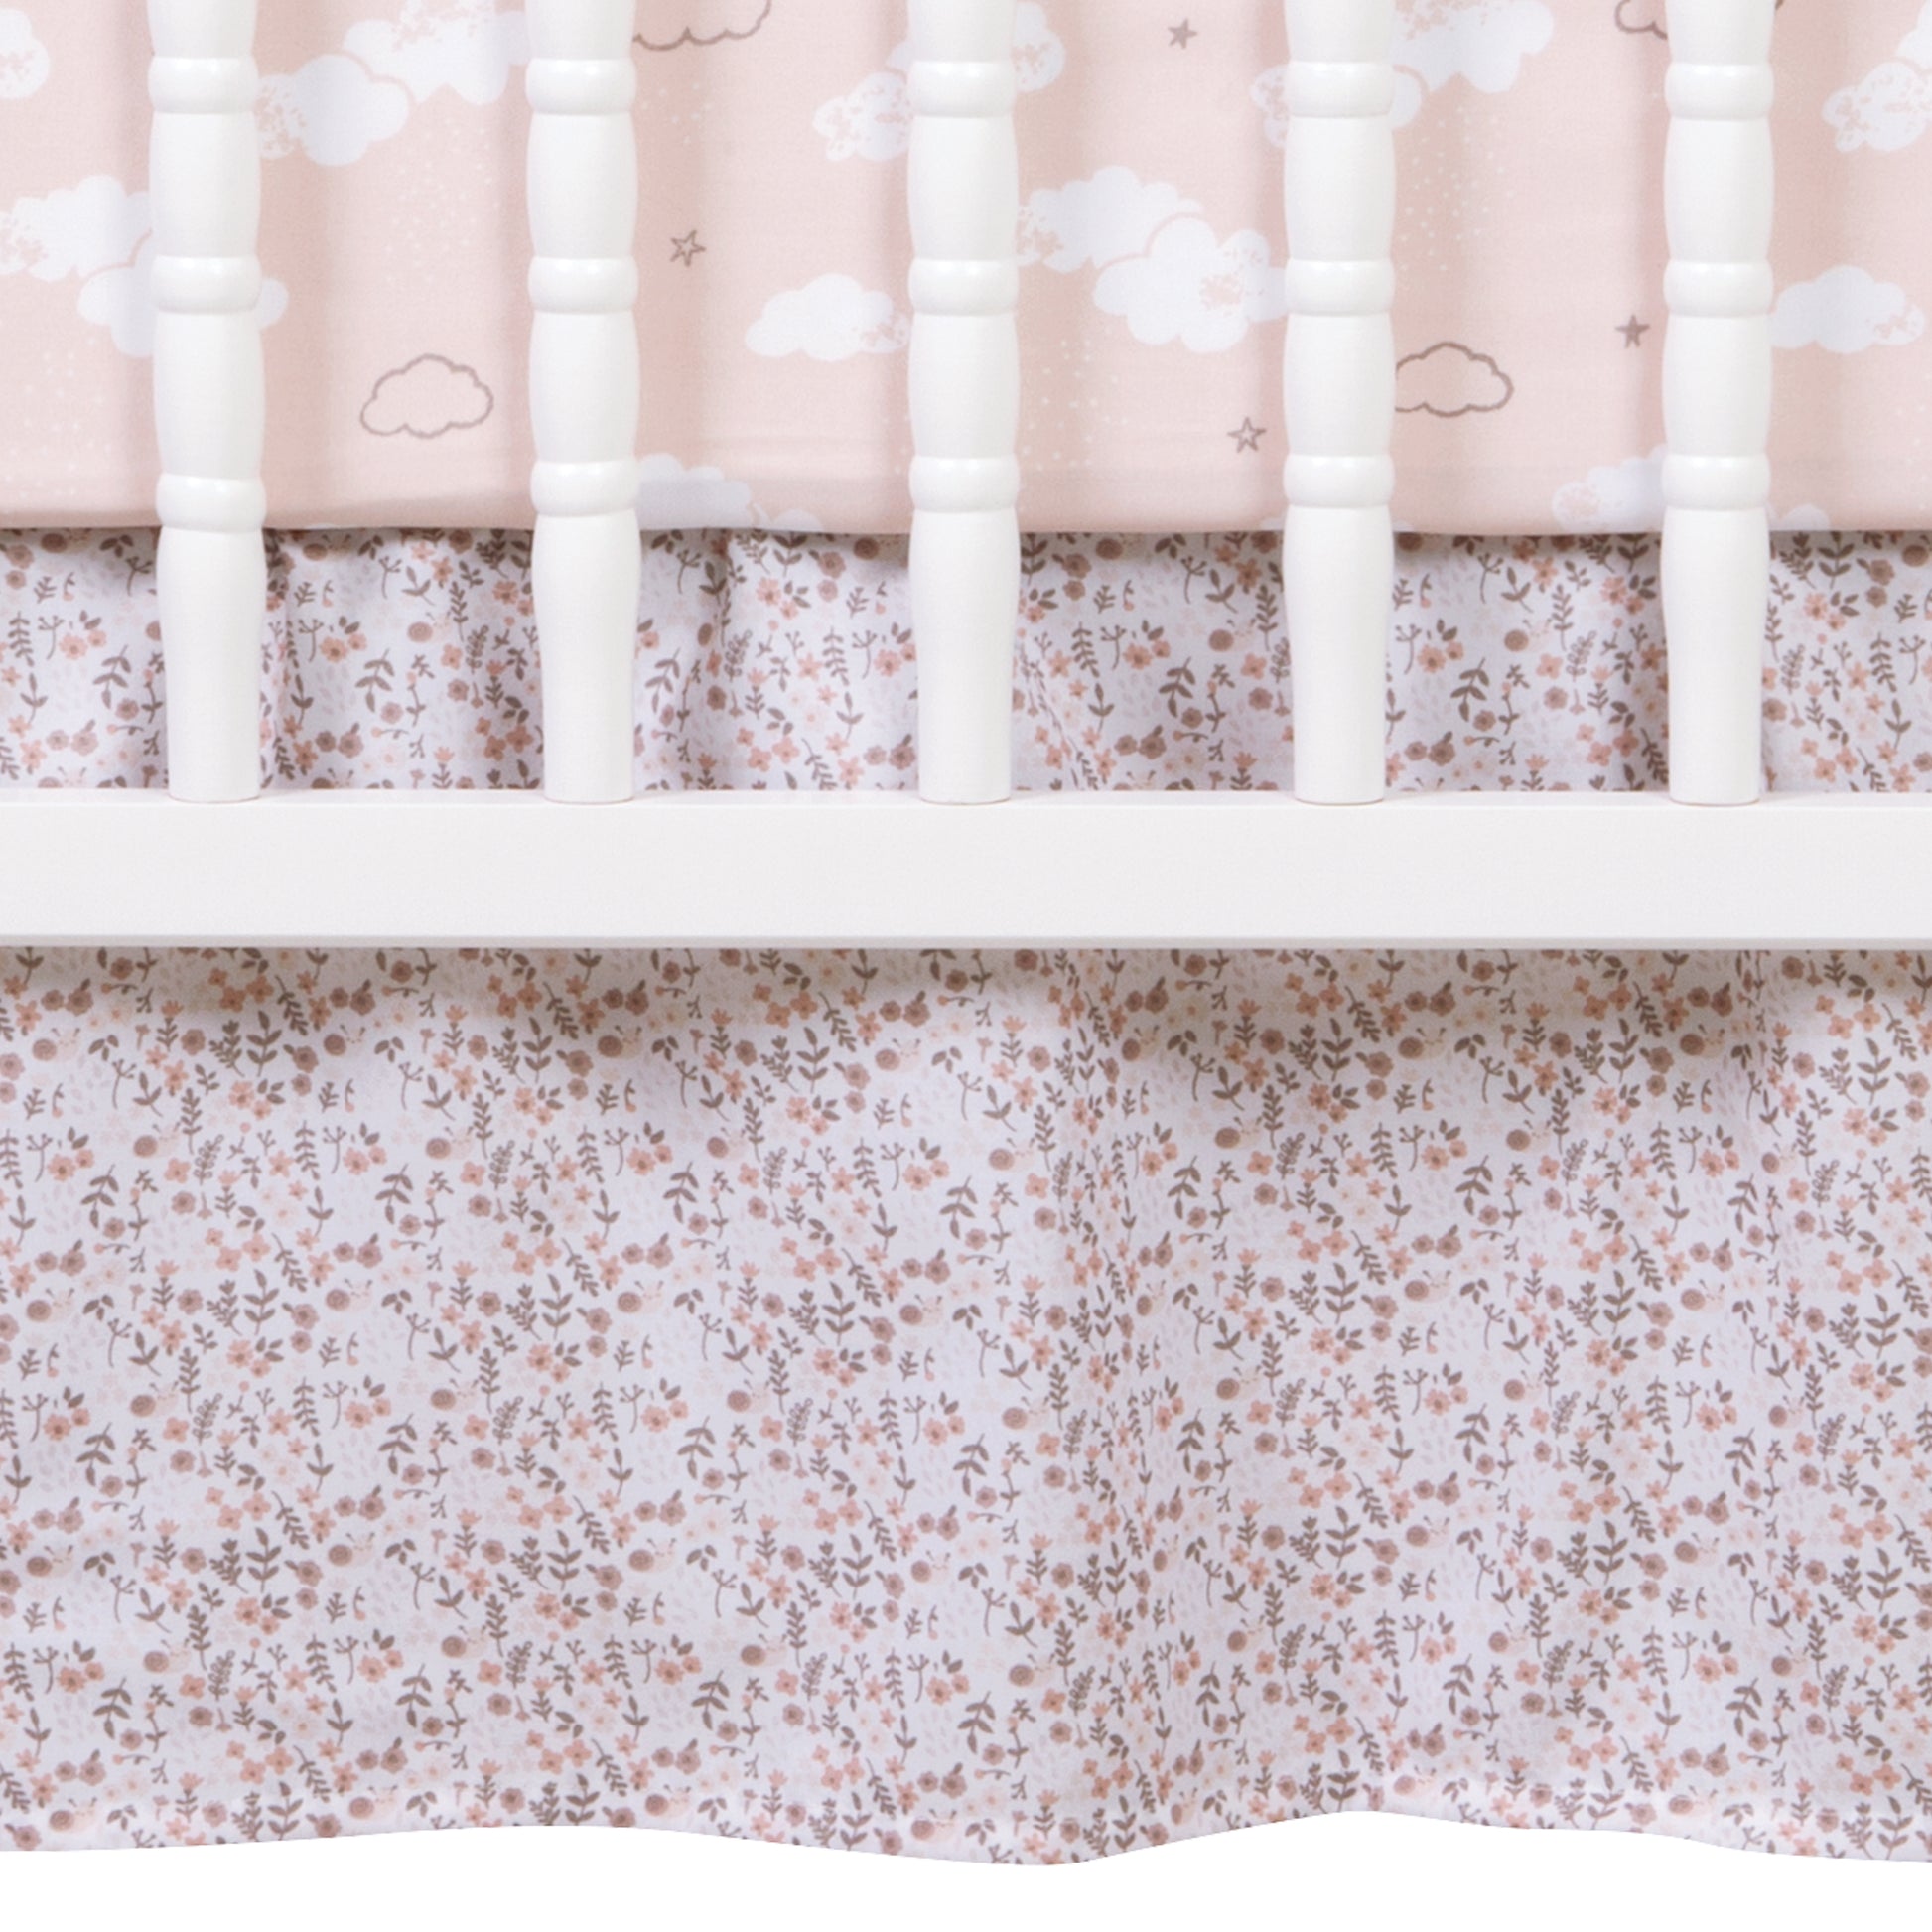 Cottontail Cloud 4 Piece Crib Bedding Set; crib sheet and crib skirt by Sammy & Lou®